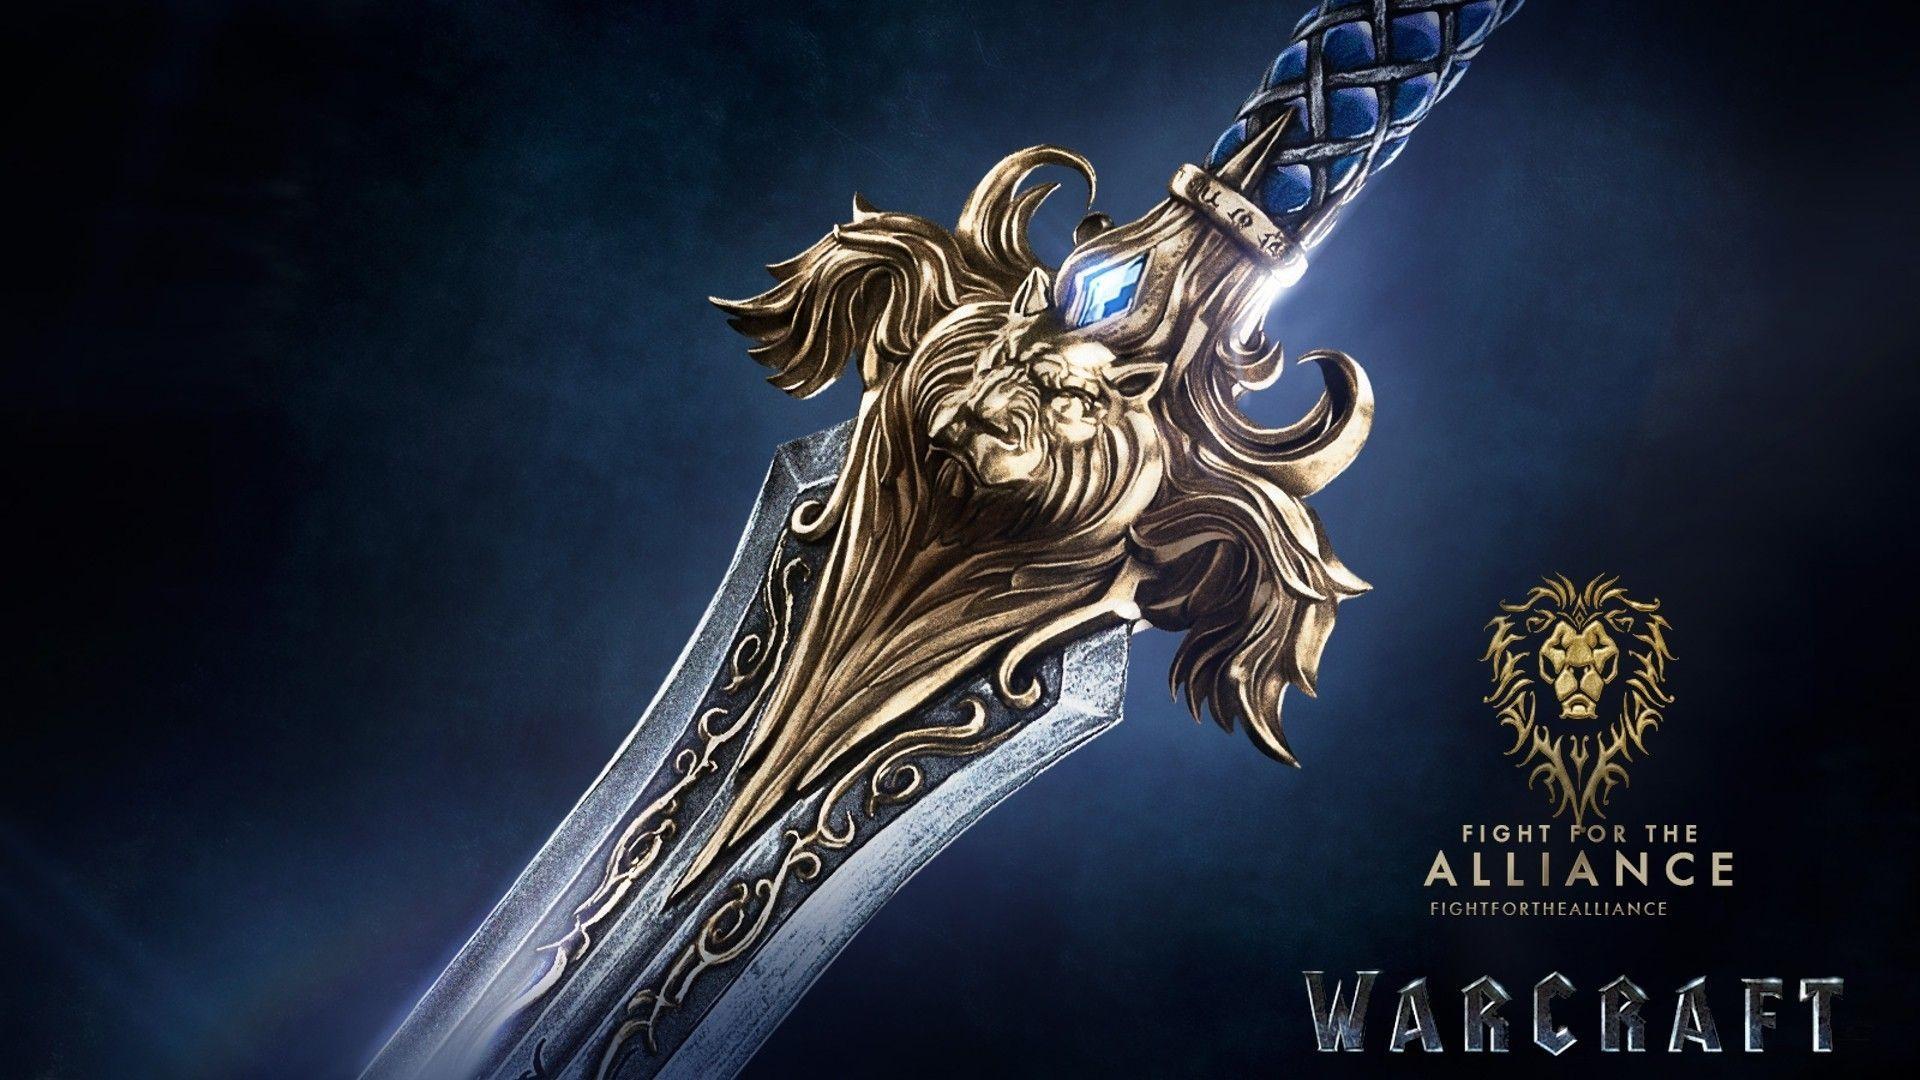 Warcraft Film 2016 HD wallpaper free download